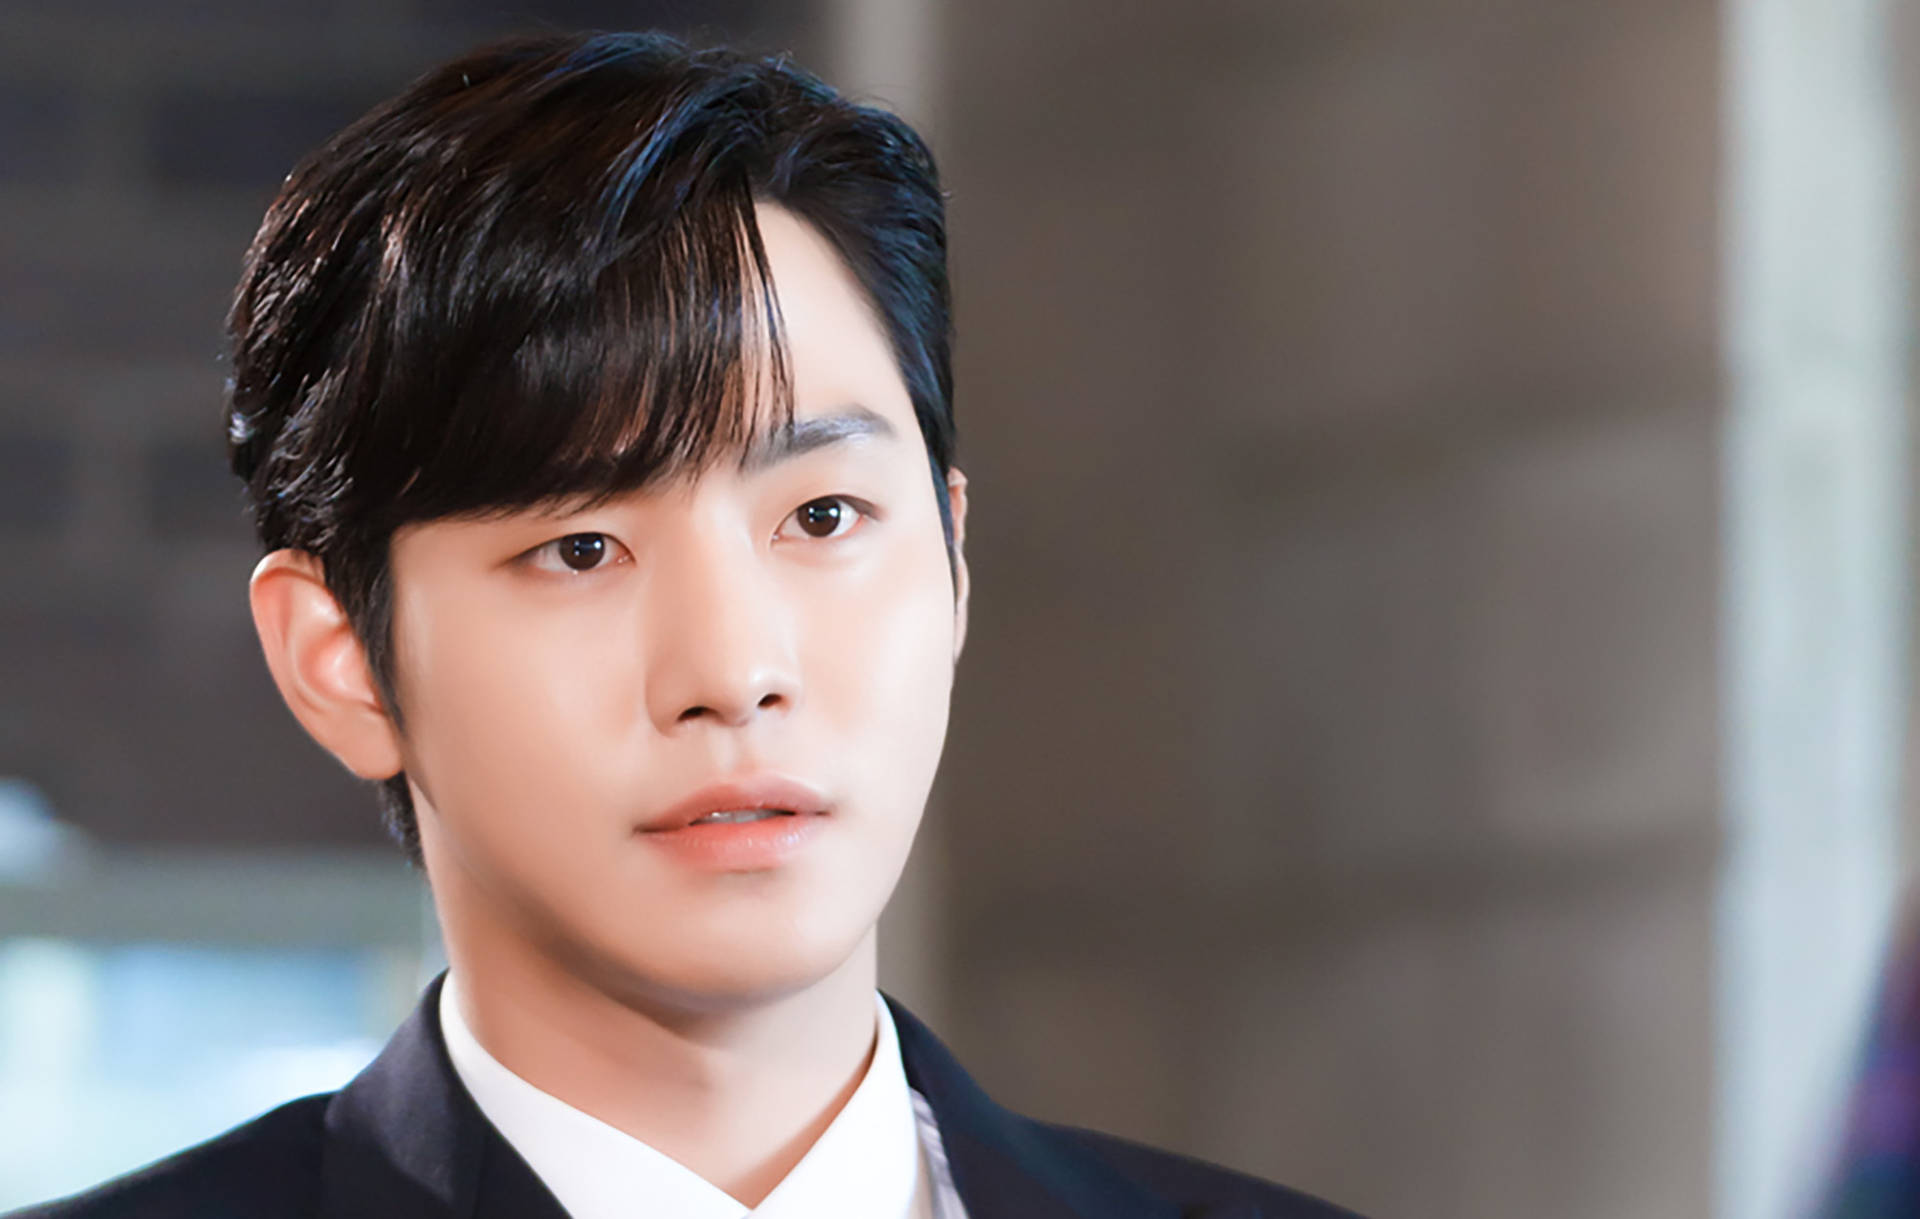 Actor Ahn Yeo Seop Business Proposal Background